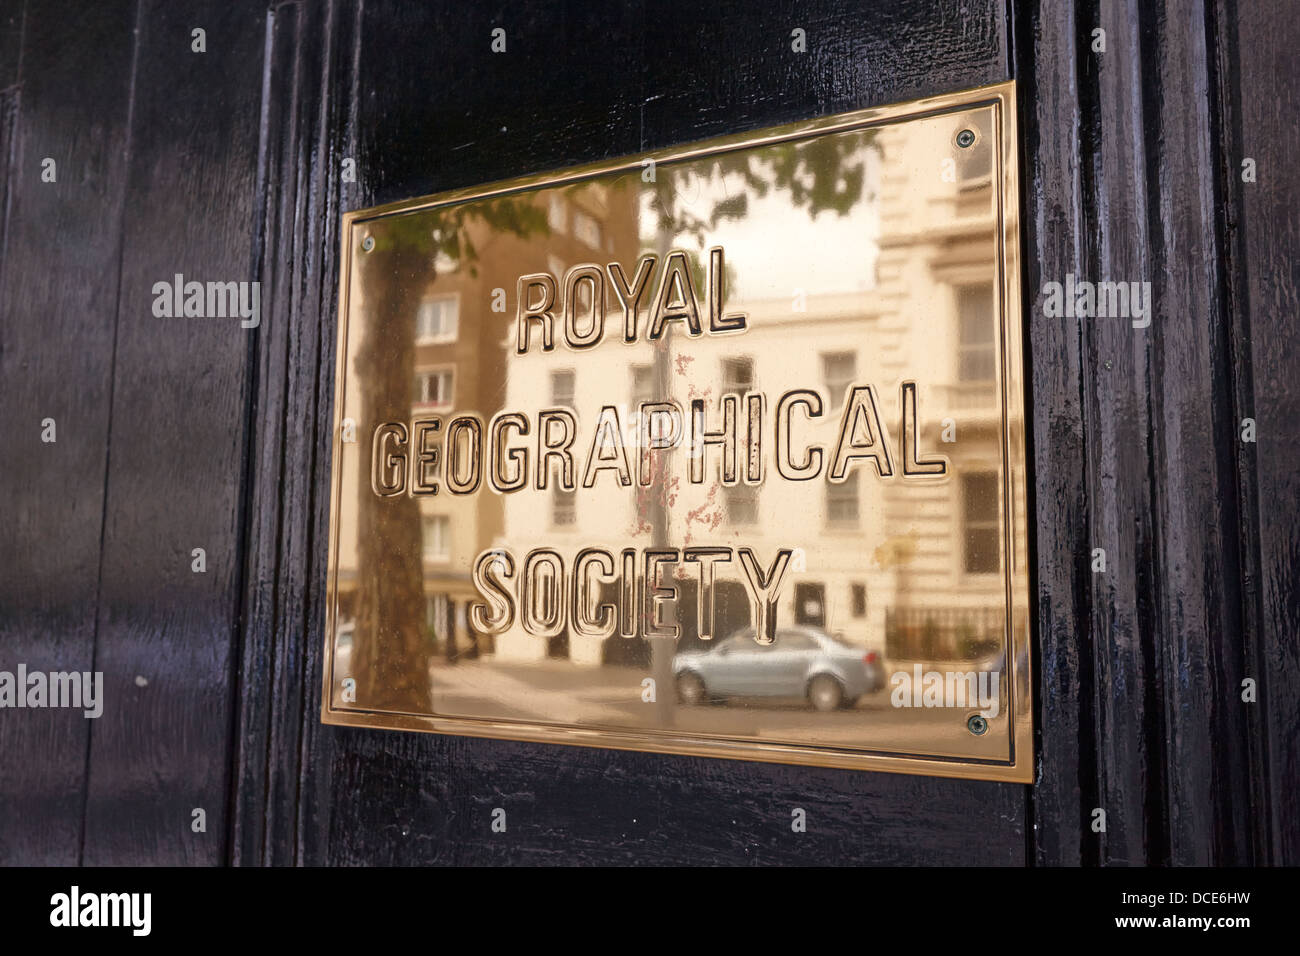 the royal geographical society London England UK Stock Photo